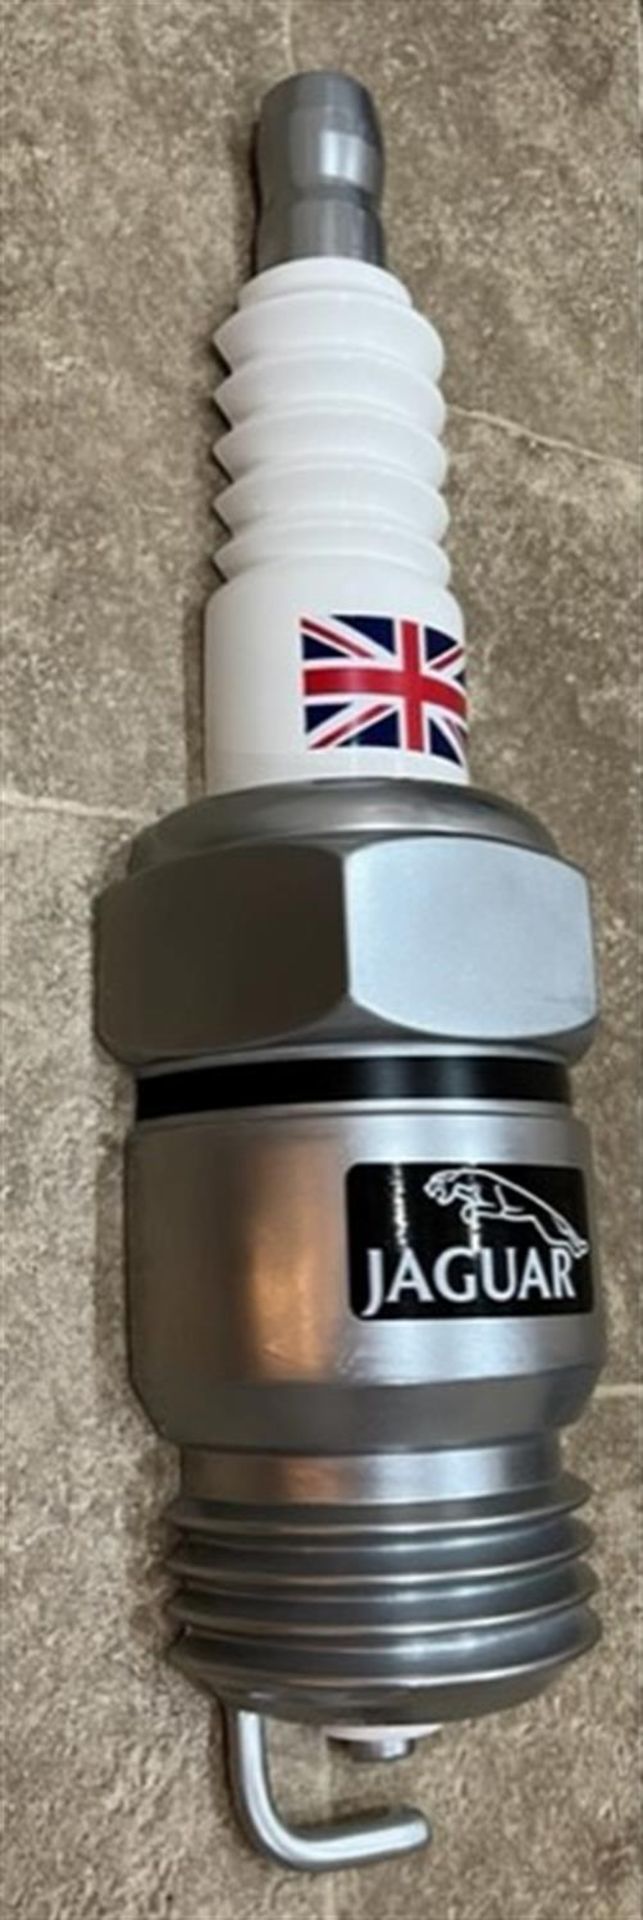 An Oversized Jaguar-Themed 'Spark Plug' - 3D Fibreglass Wall Art - Image 2 of 4